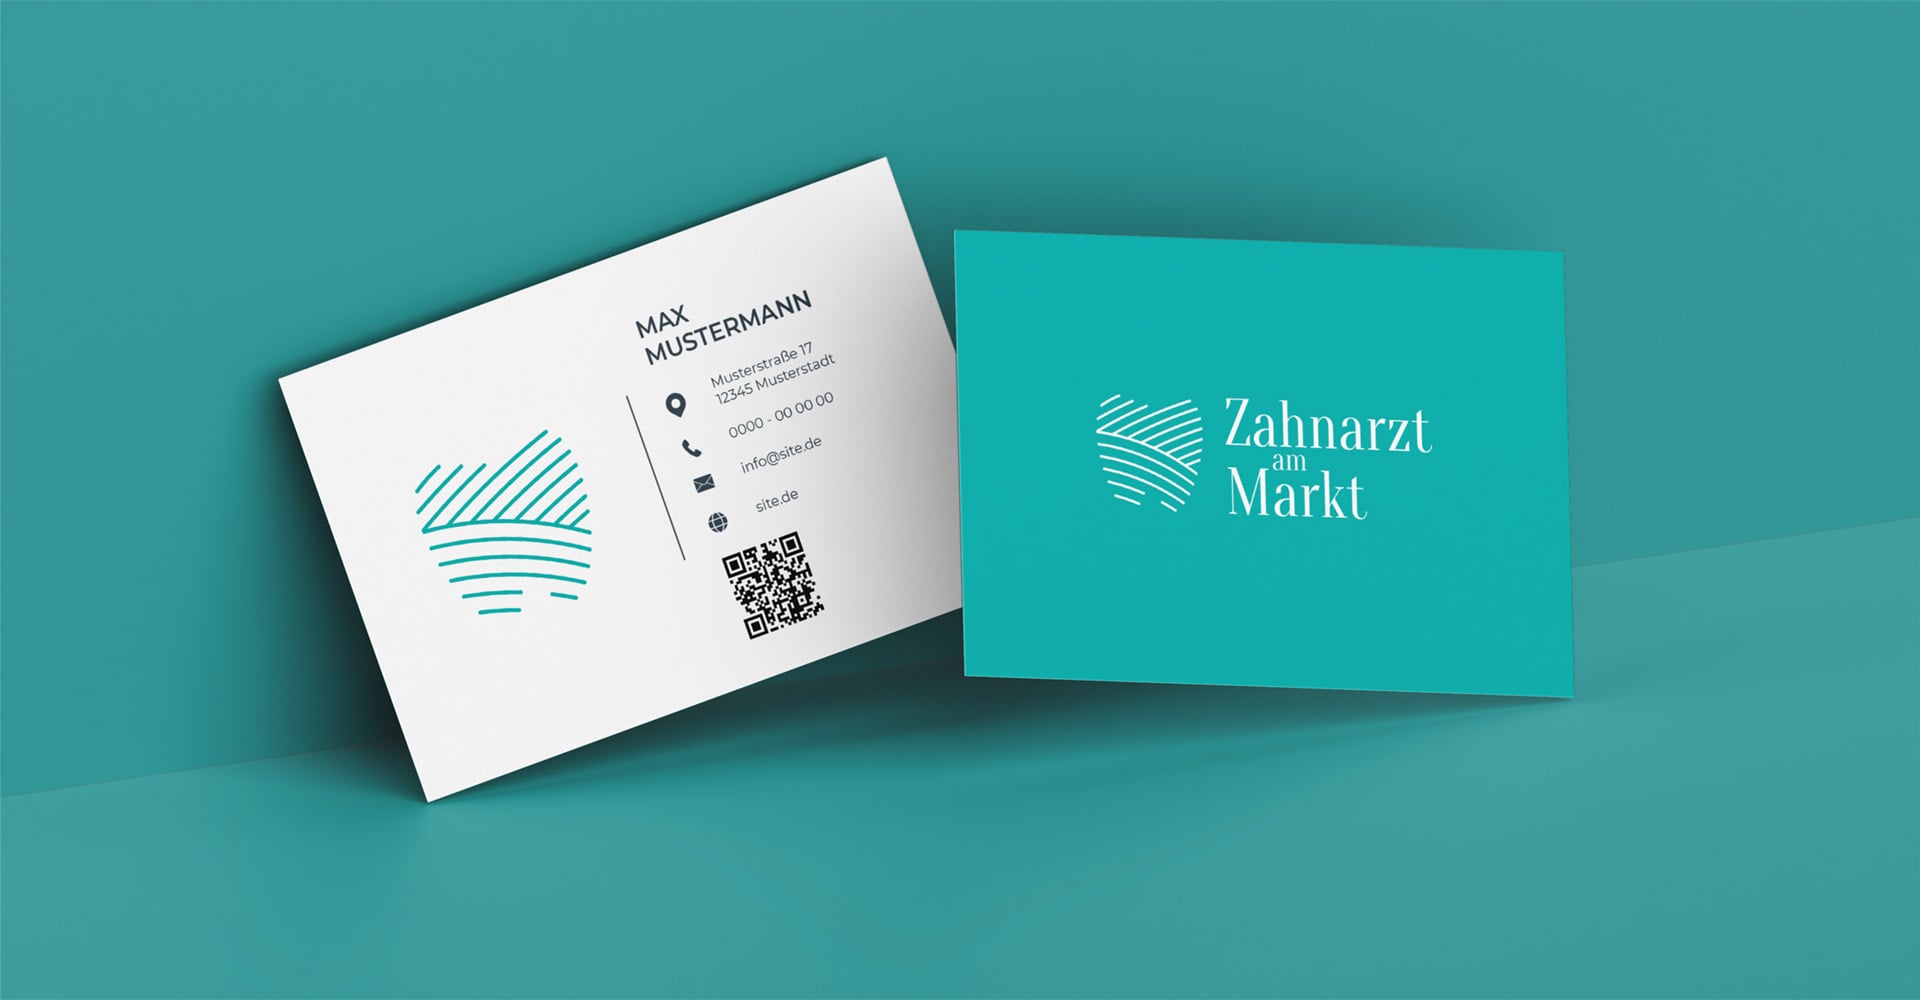 Графический дизайн Zahnartz am Markt